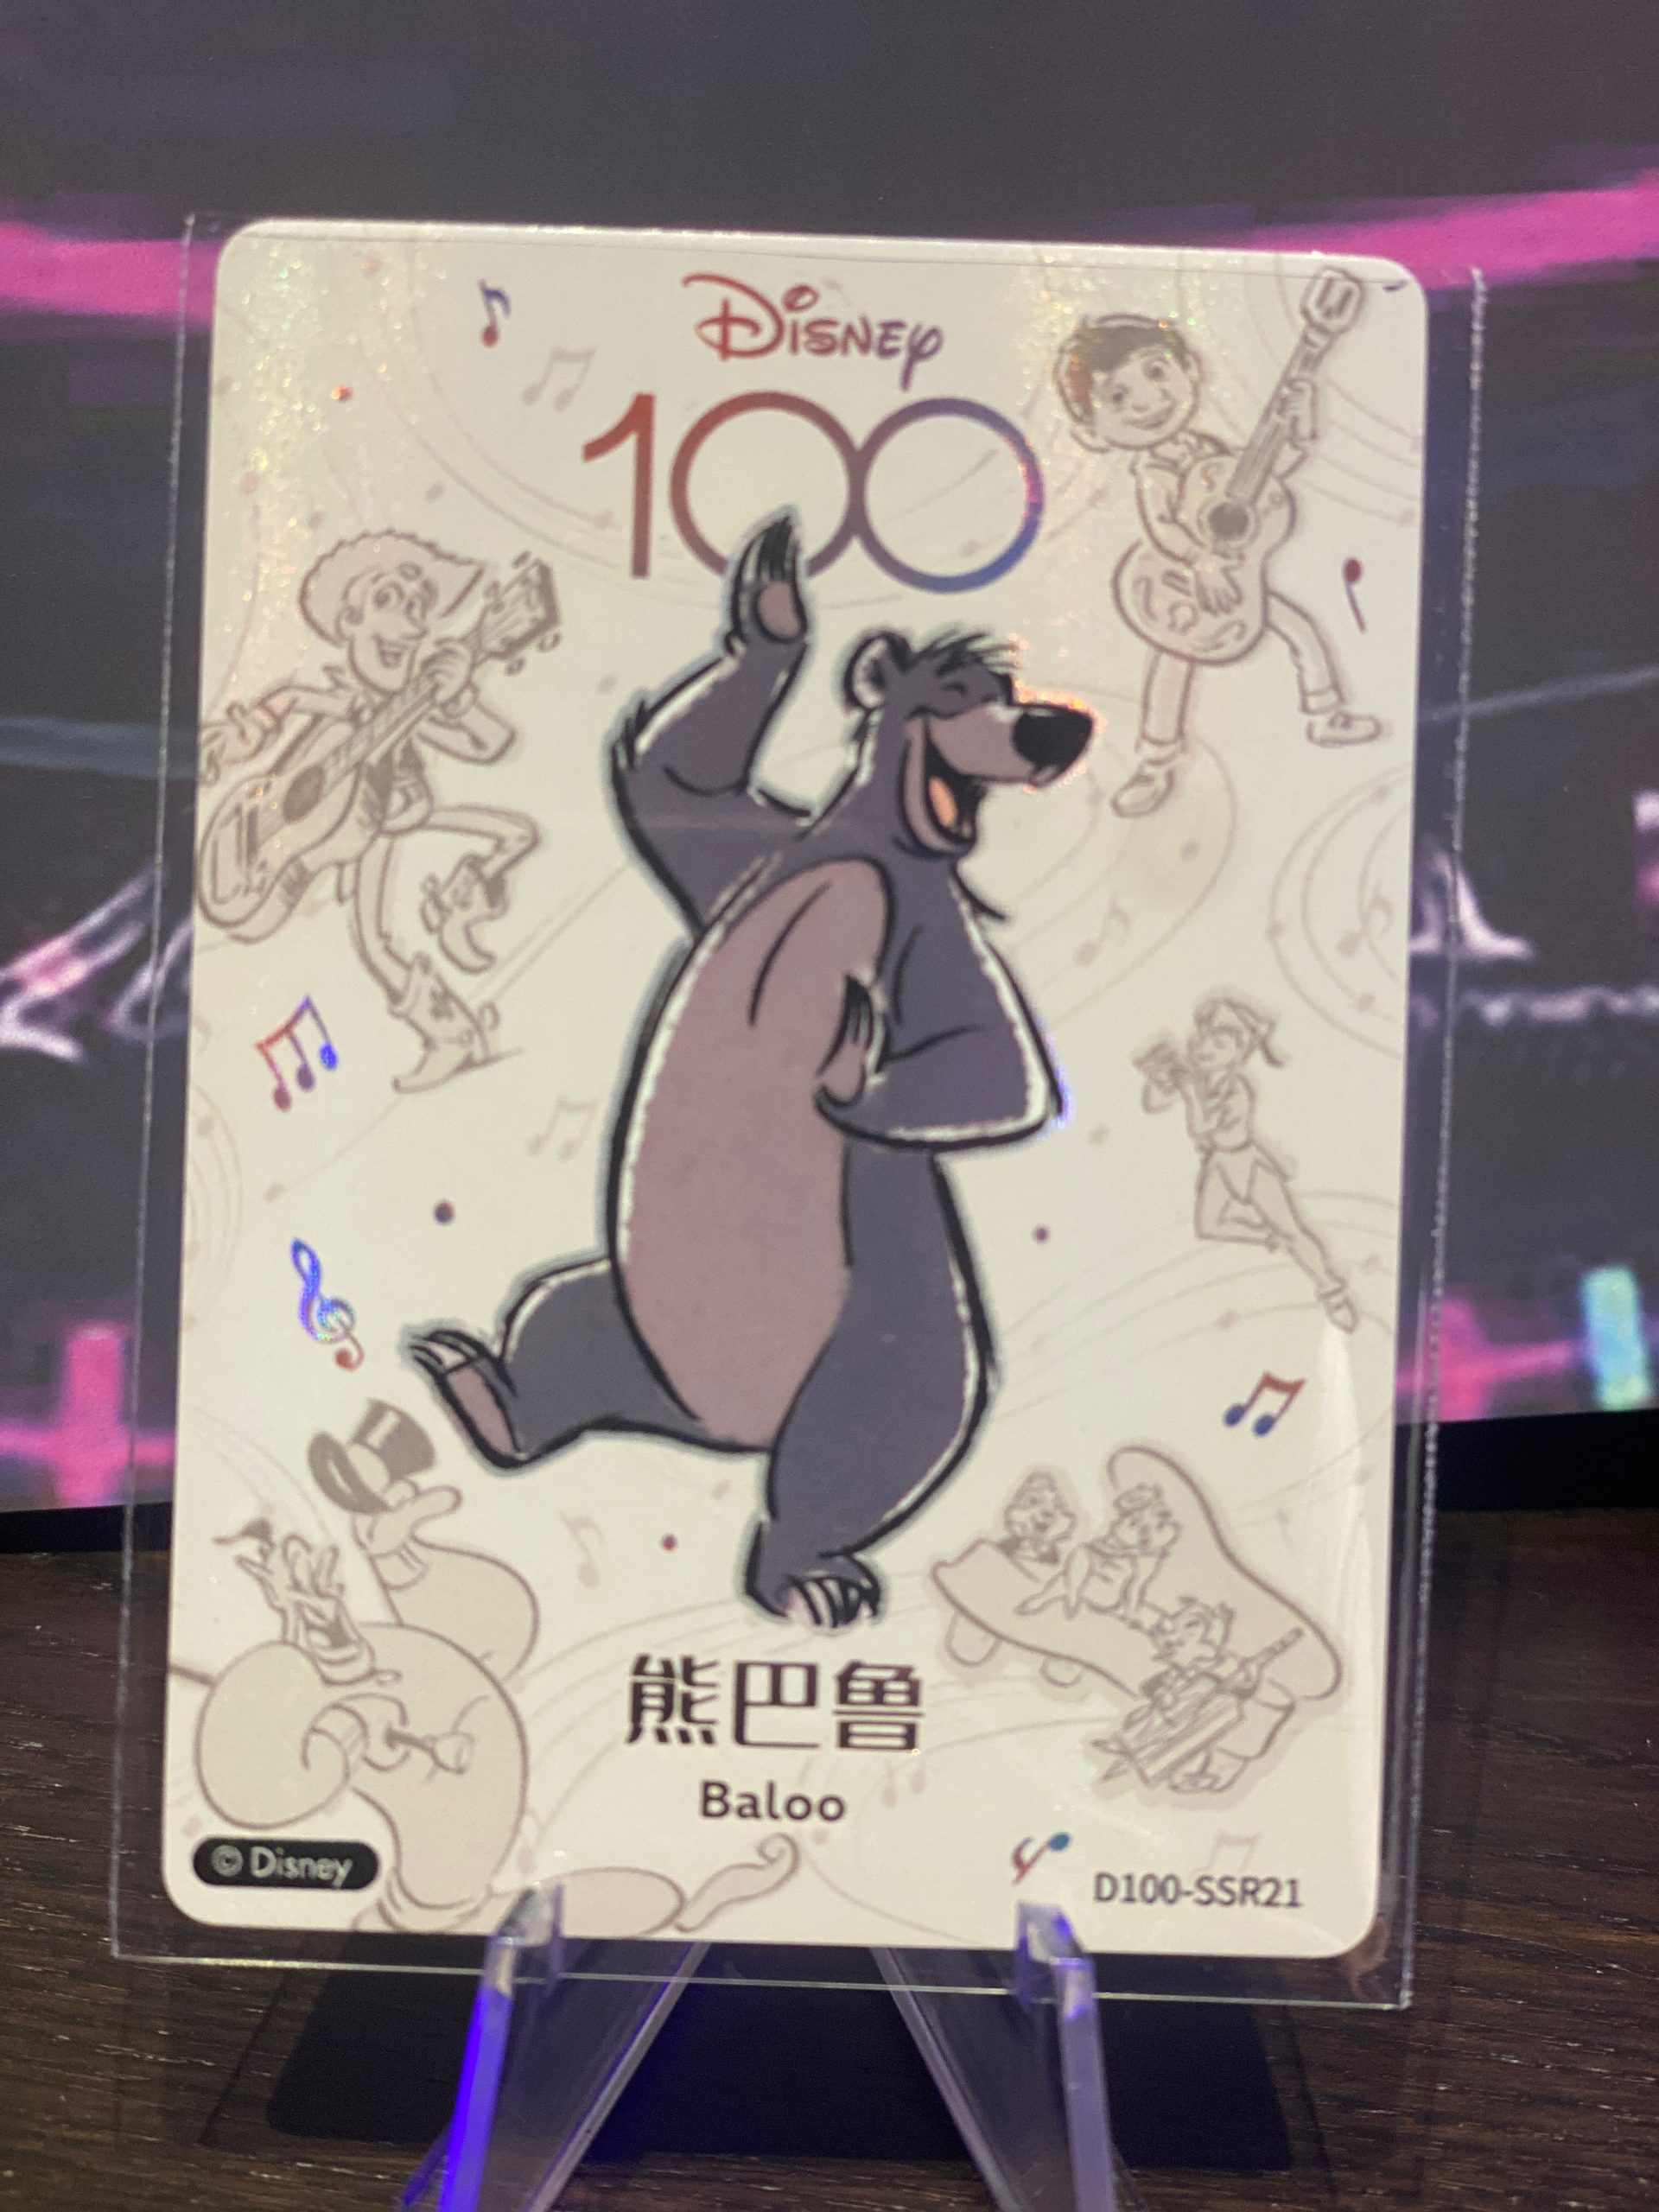 Cards Fun Joyful Disney 100 Years Card Orchestra D100-SSR21 Baloo